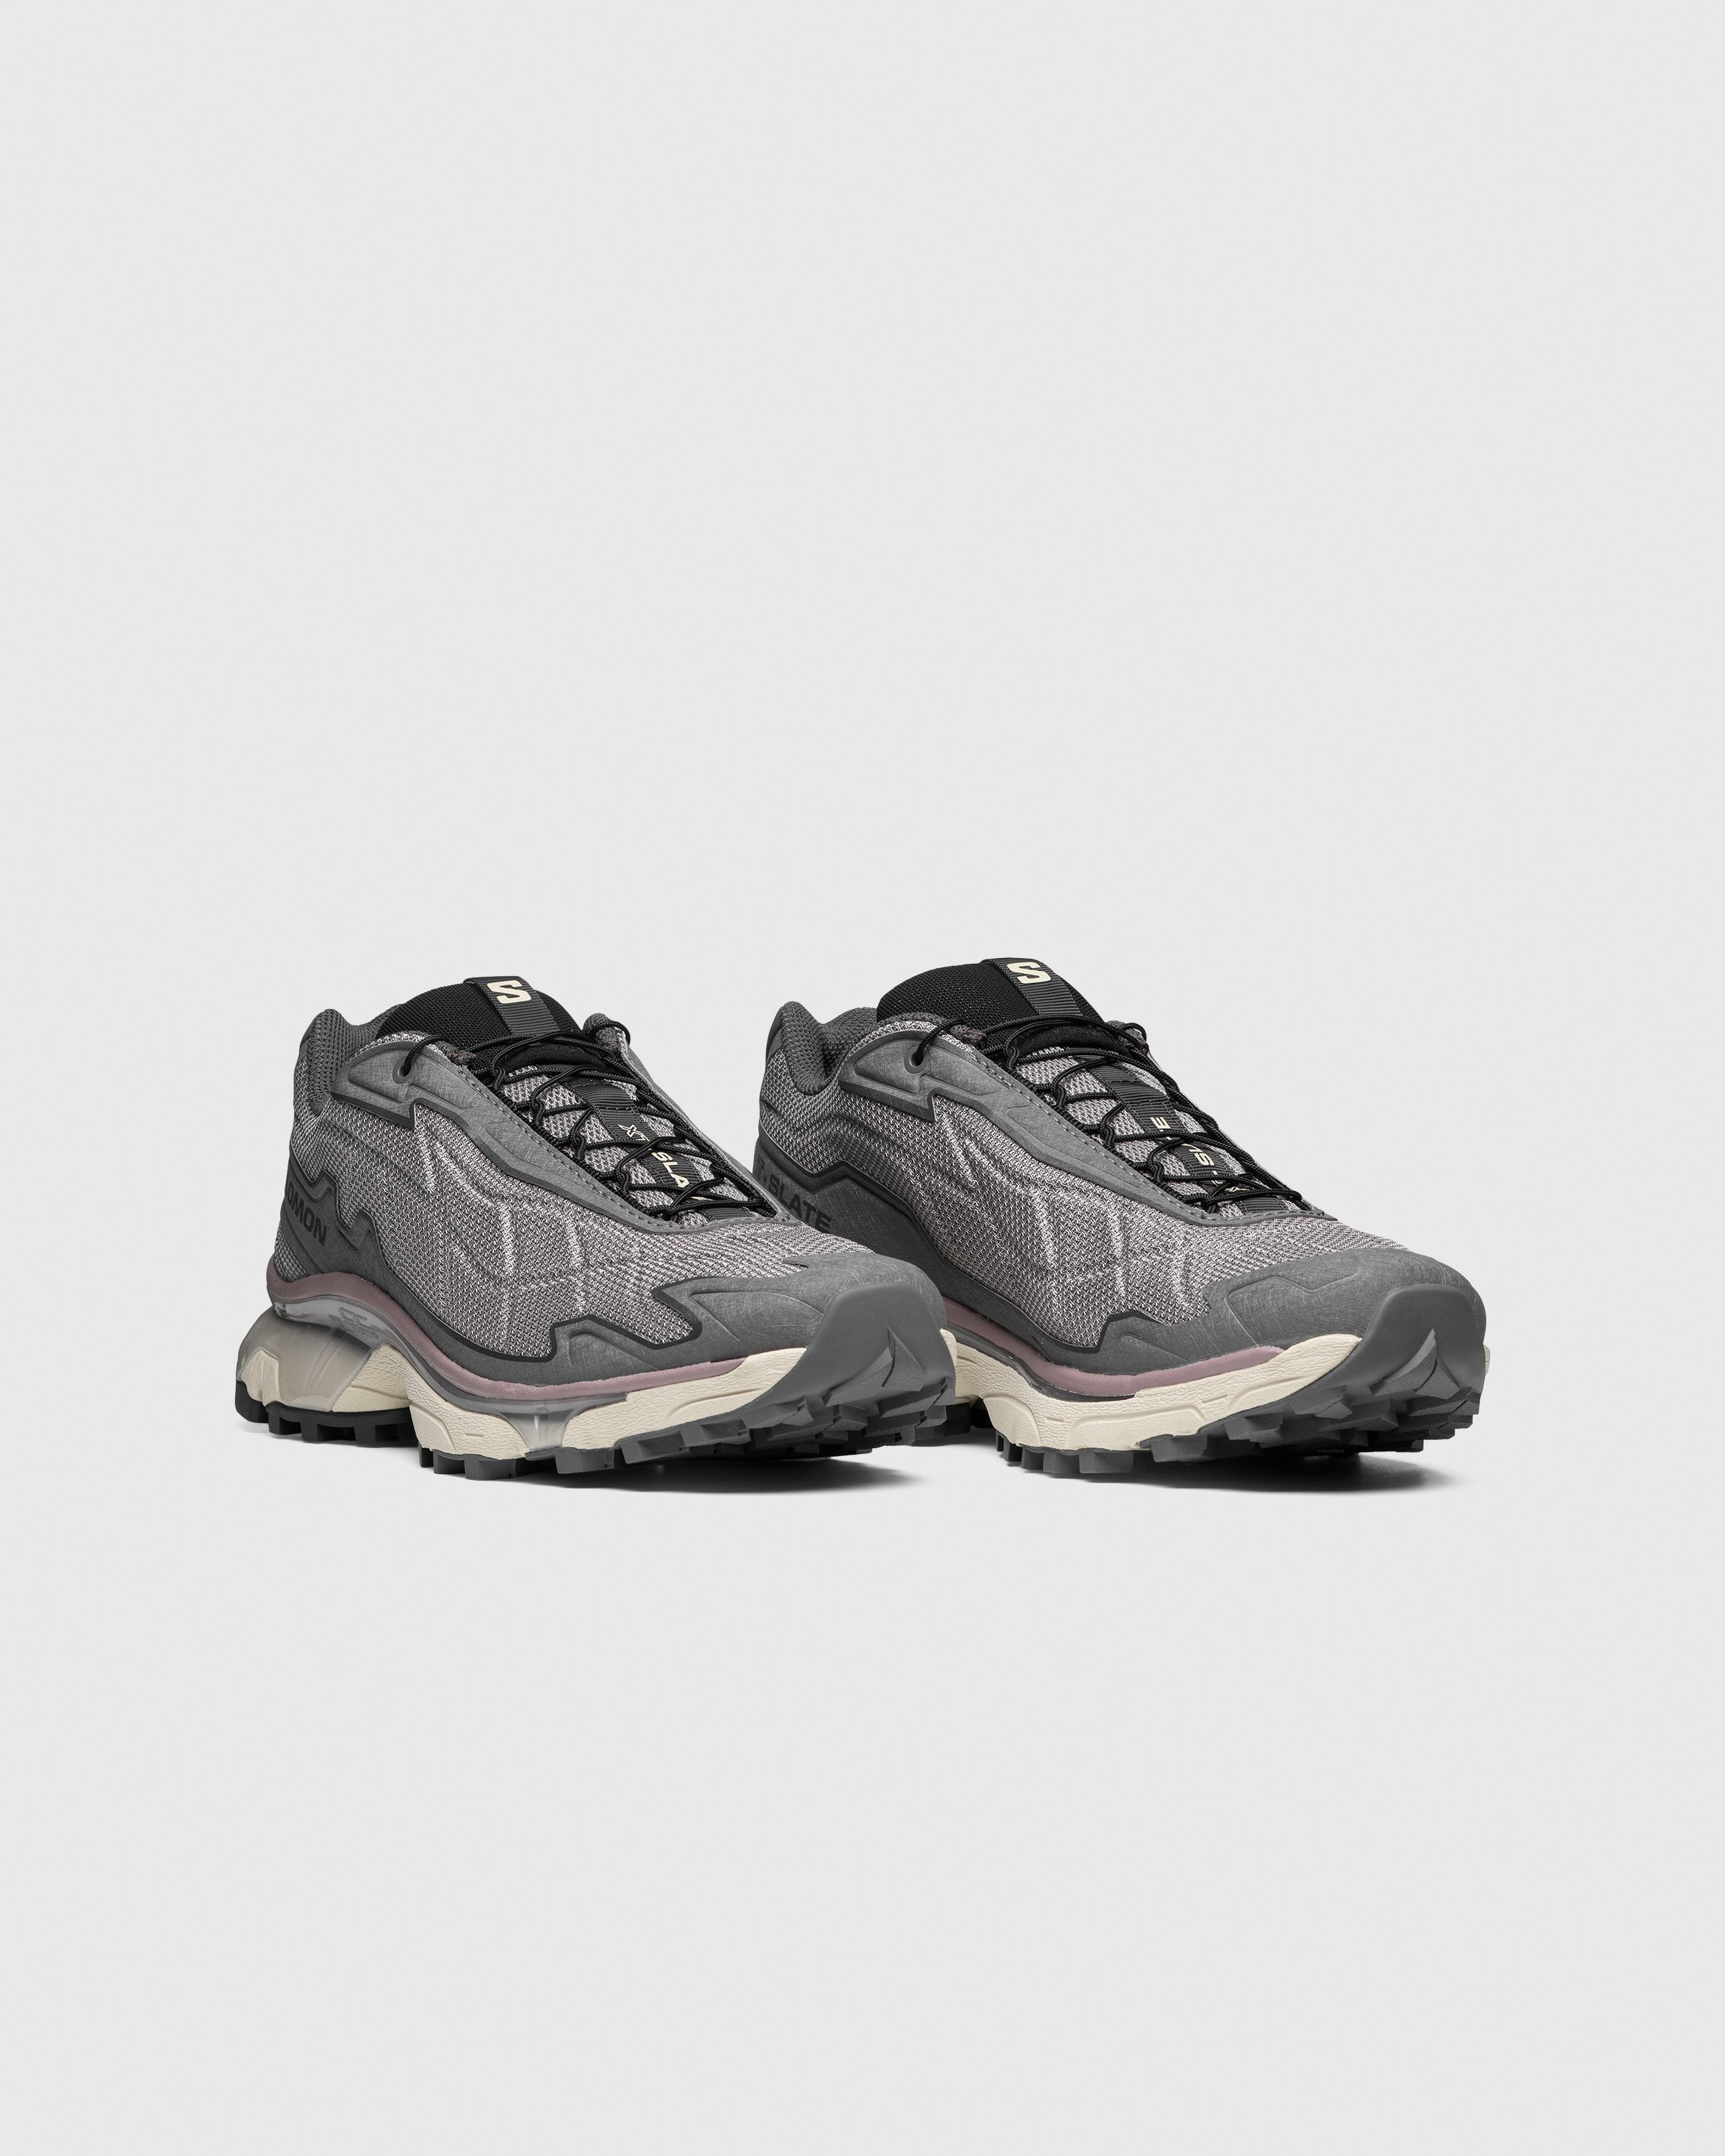 Salomon - XT-SLATE ADVANCED Gull/Moonscape - Footwear - Grey - Image 2